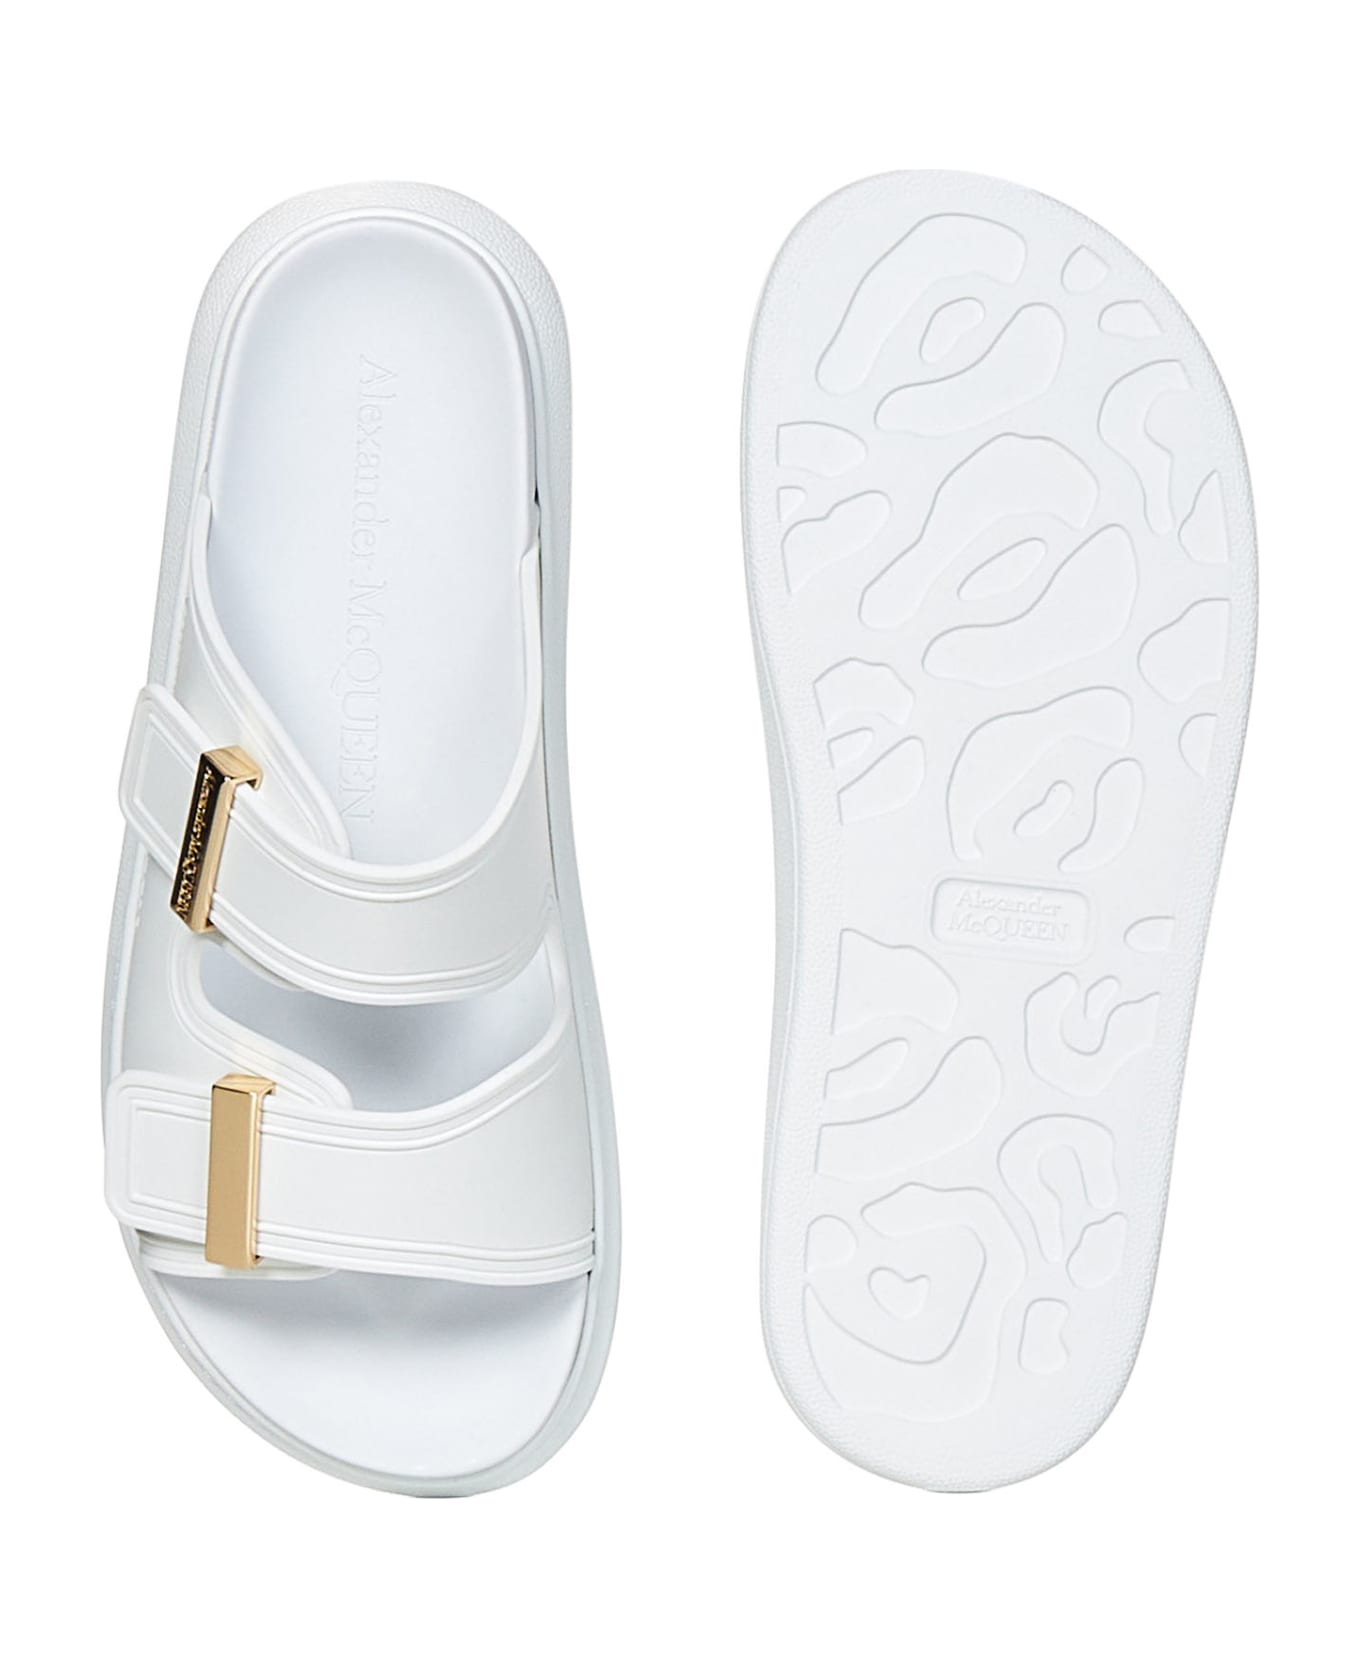 Alexander McQueen Hybrid Sandals - White サンダル